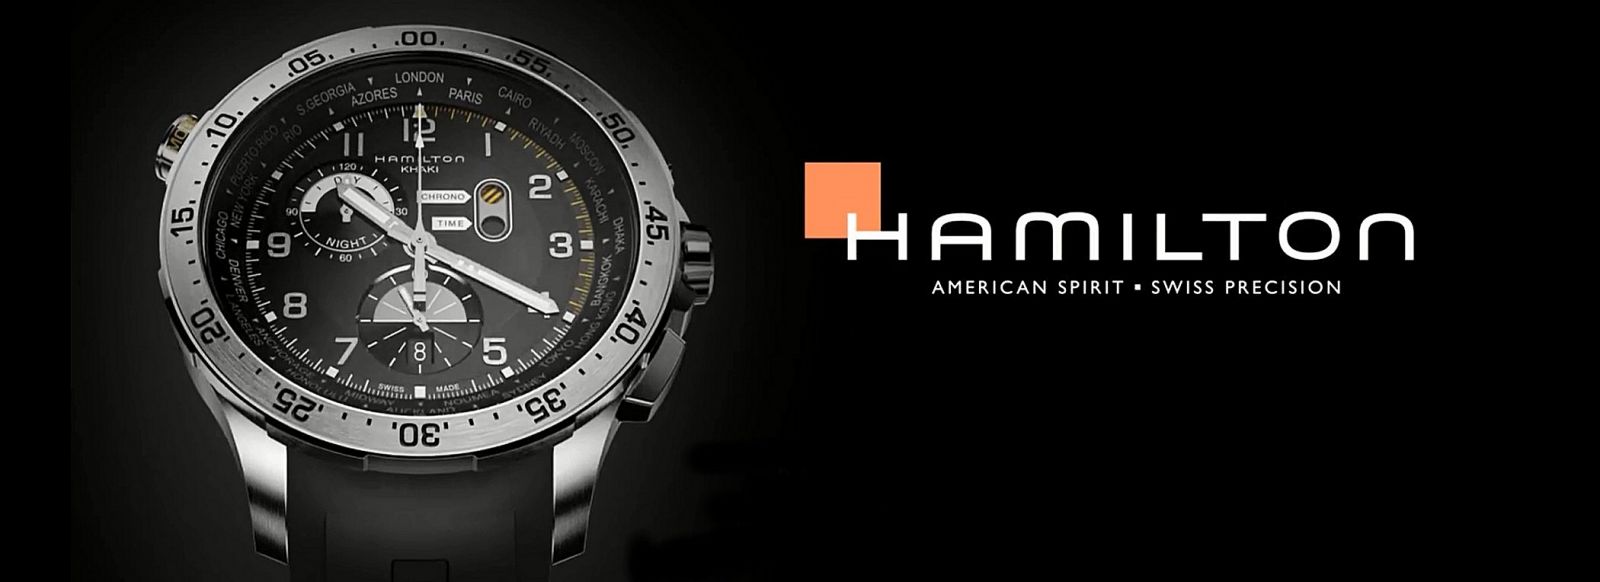 hamilton-watches-real